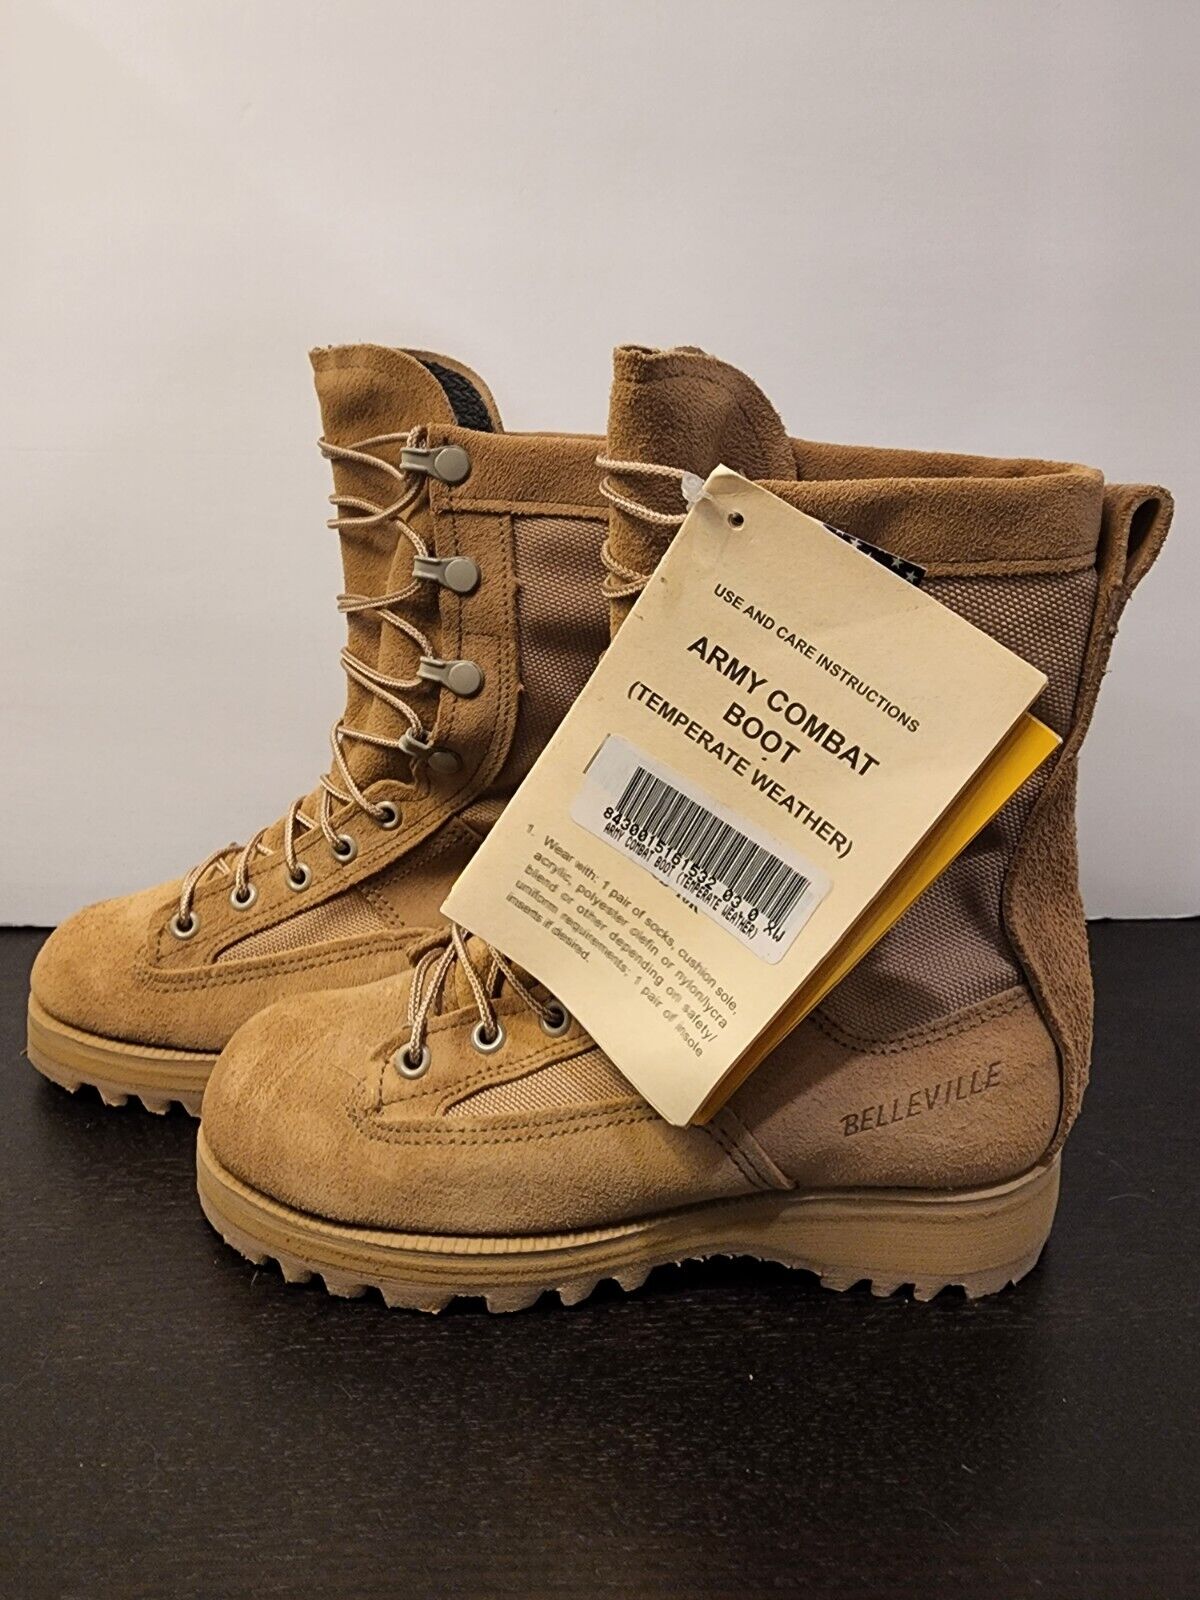 BELLEVILLE Army Combat Boots Gore-tex Authorized Military Women Sz 5.5